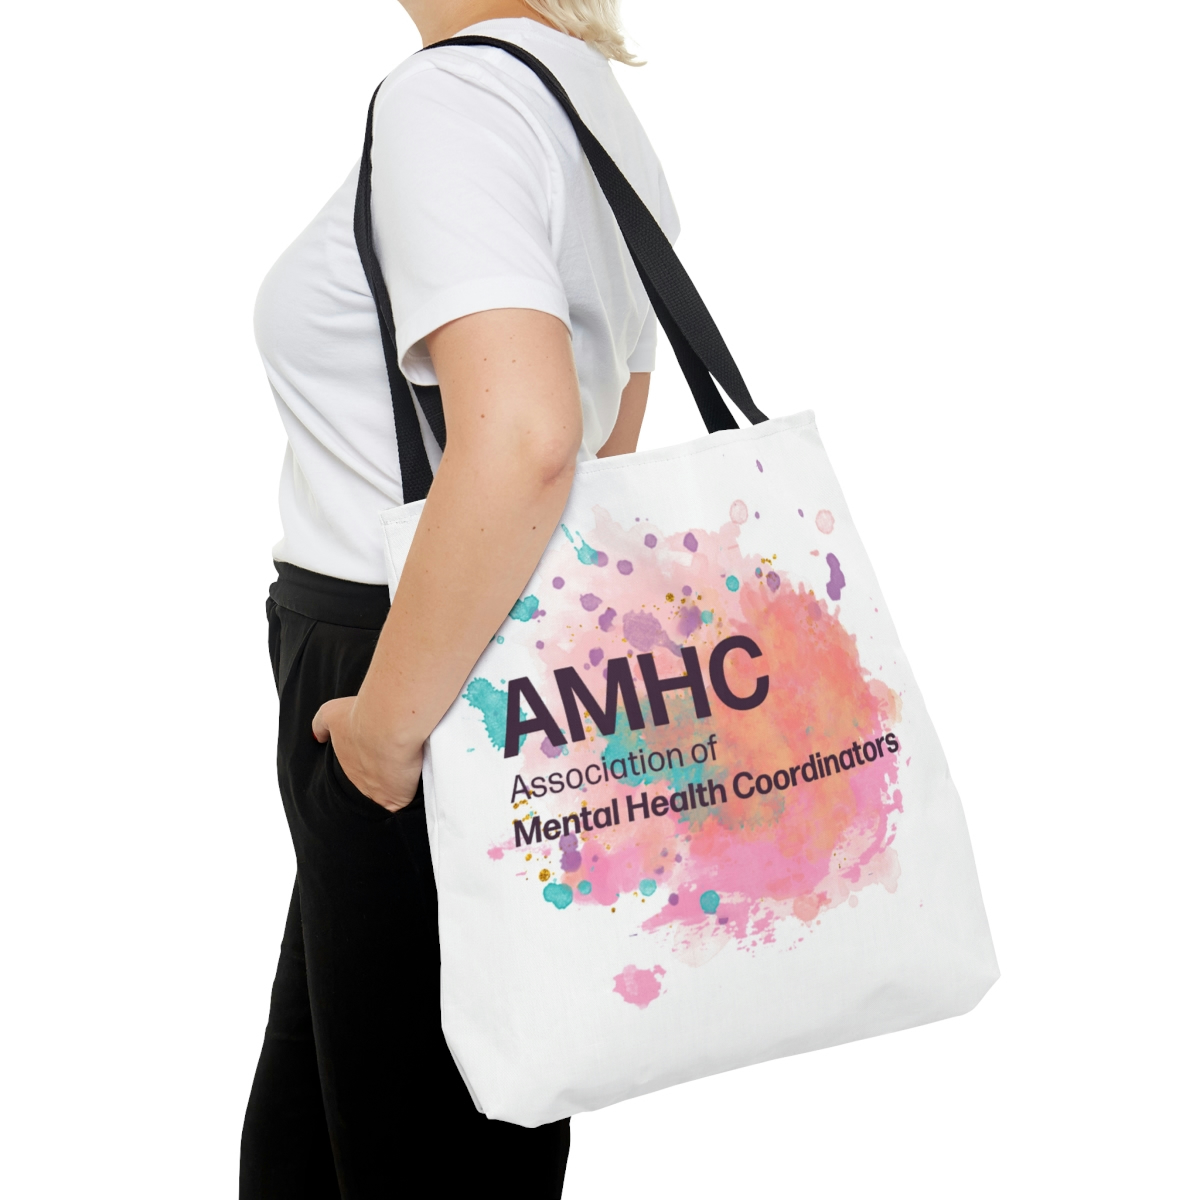 AMHC Tote Bag